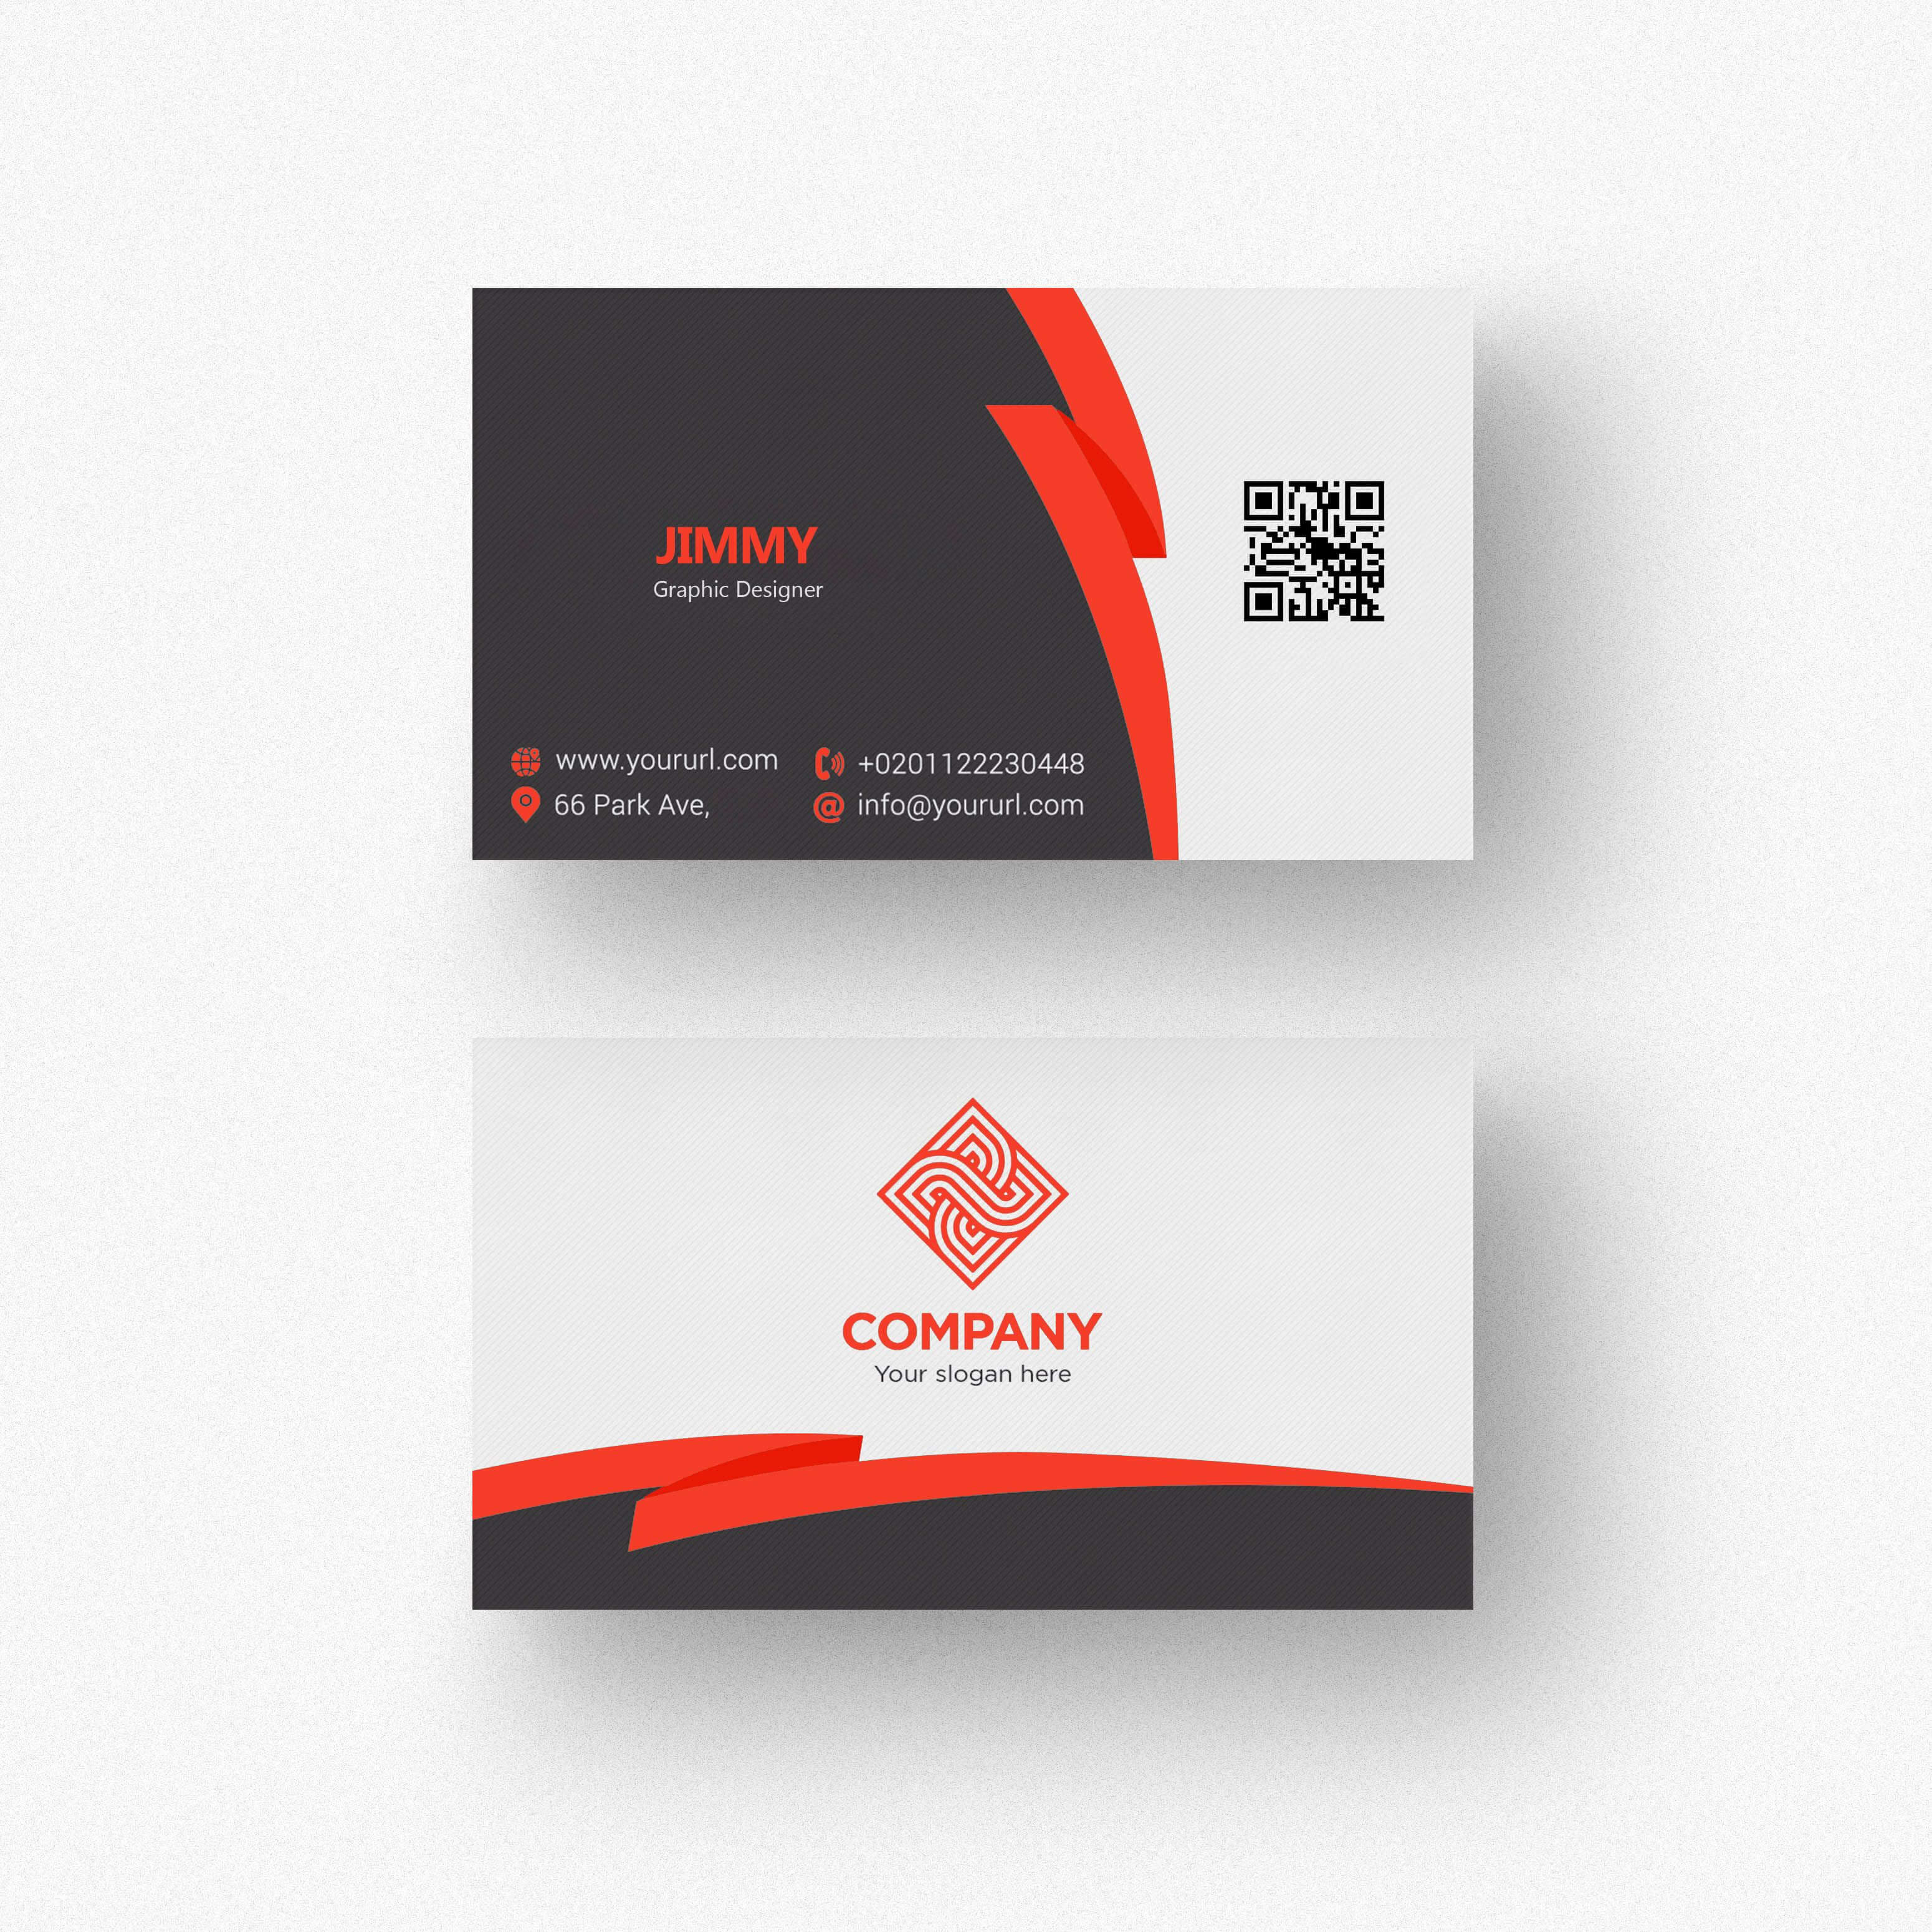 Business Card Designs | Business Card Design, Freelance With Regard To Freelance Business Card Template